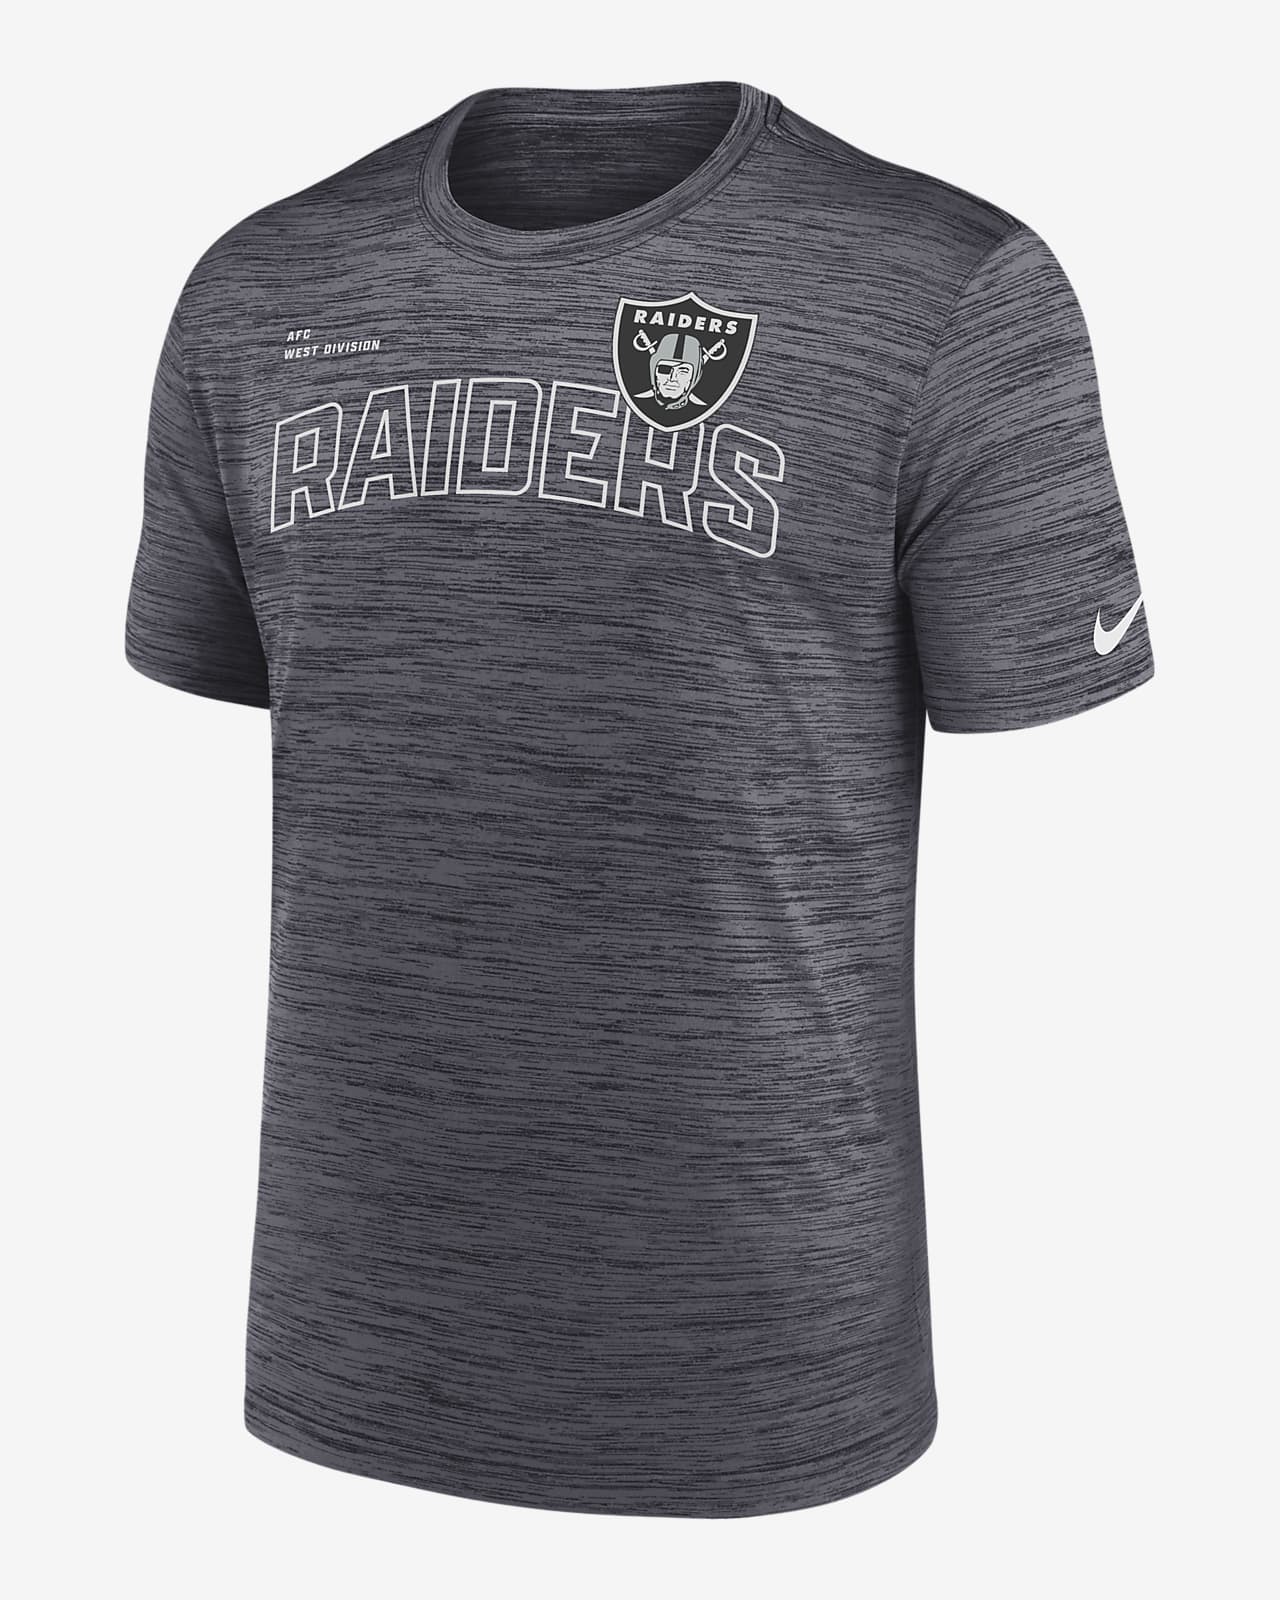 Las Vegas Raiders Grey T-Shirt (Men)